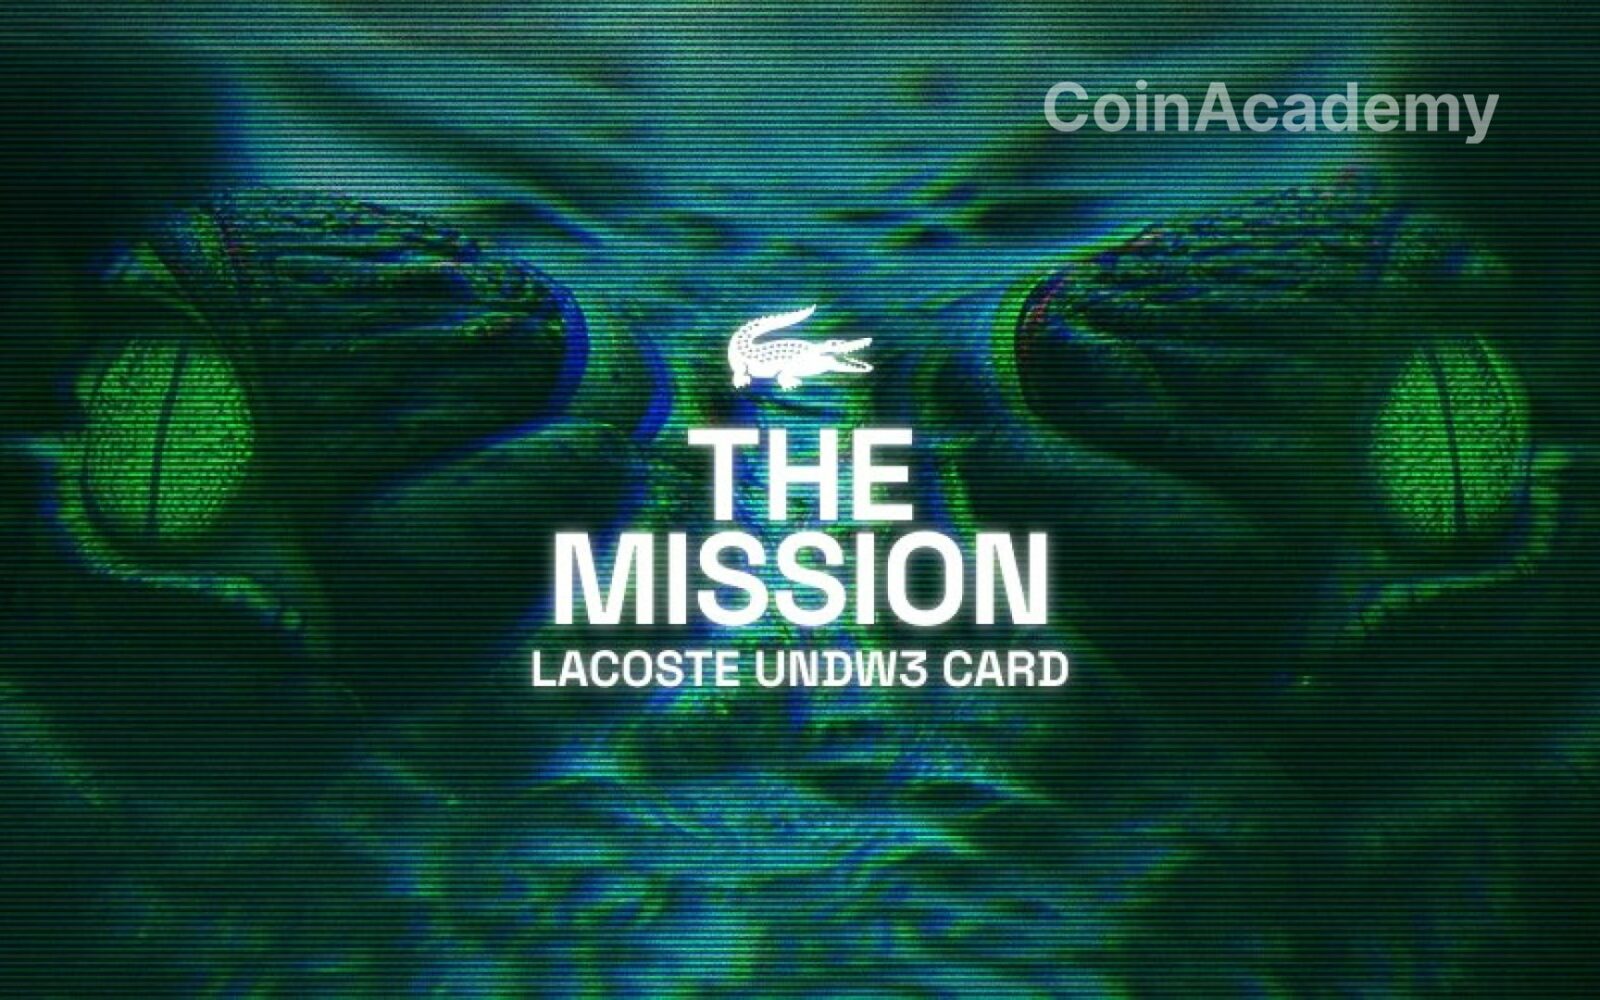 Lacoste UNDW3 Card